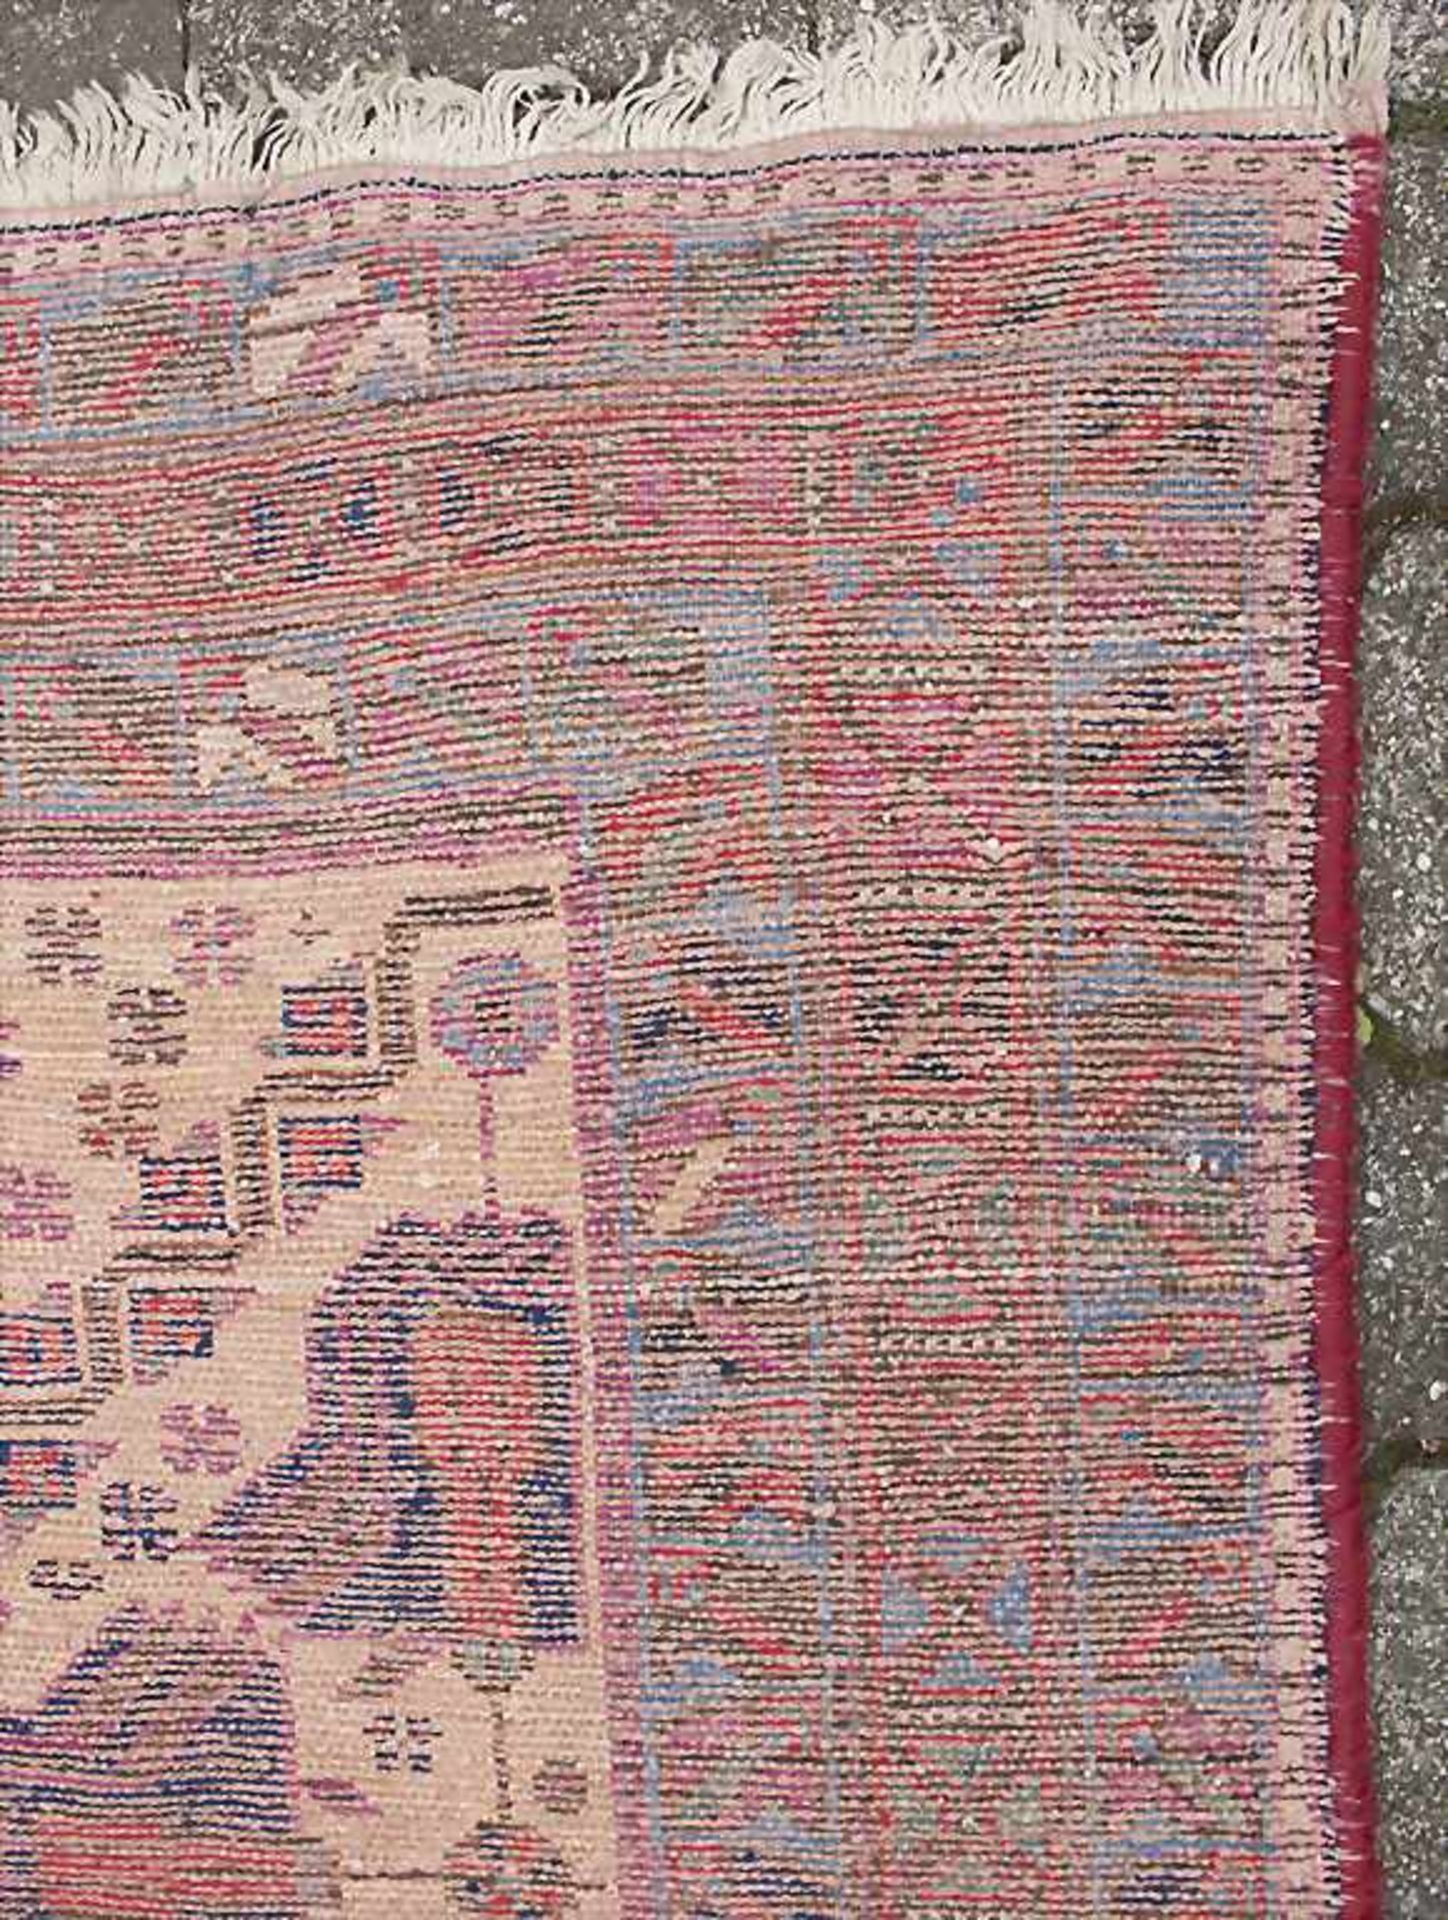 Teppich / A carpetMaterial: Wolle, Maße: 195 x 150 cm, Zustand: gut, partiell etwas betreten- - - - Bild 4 aus 4